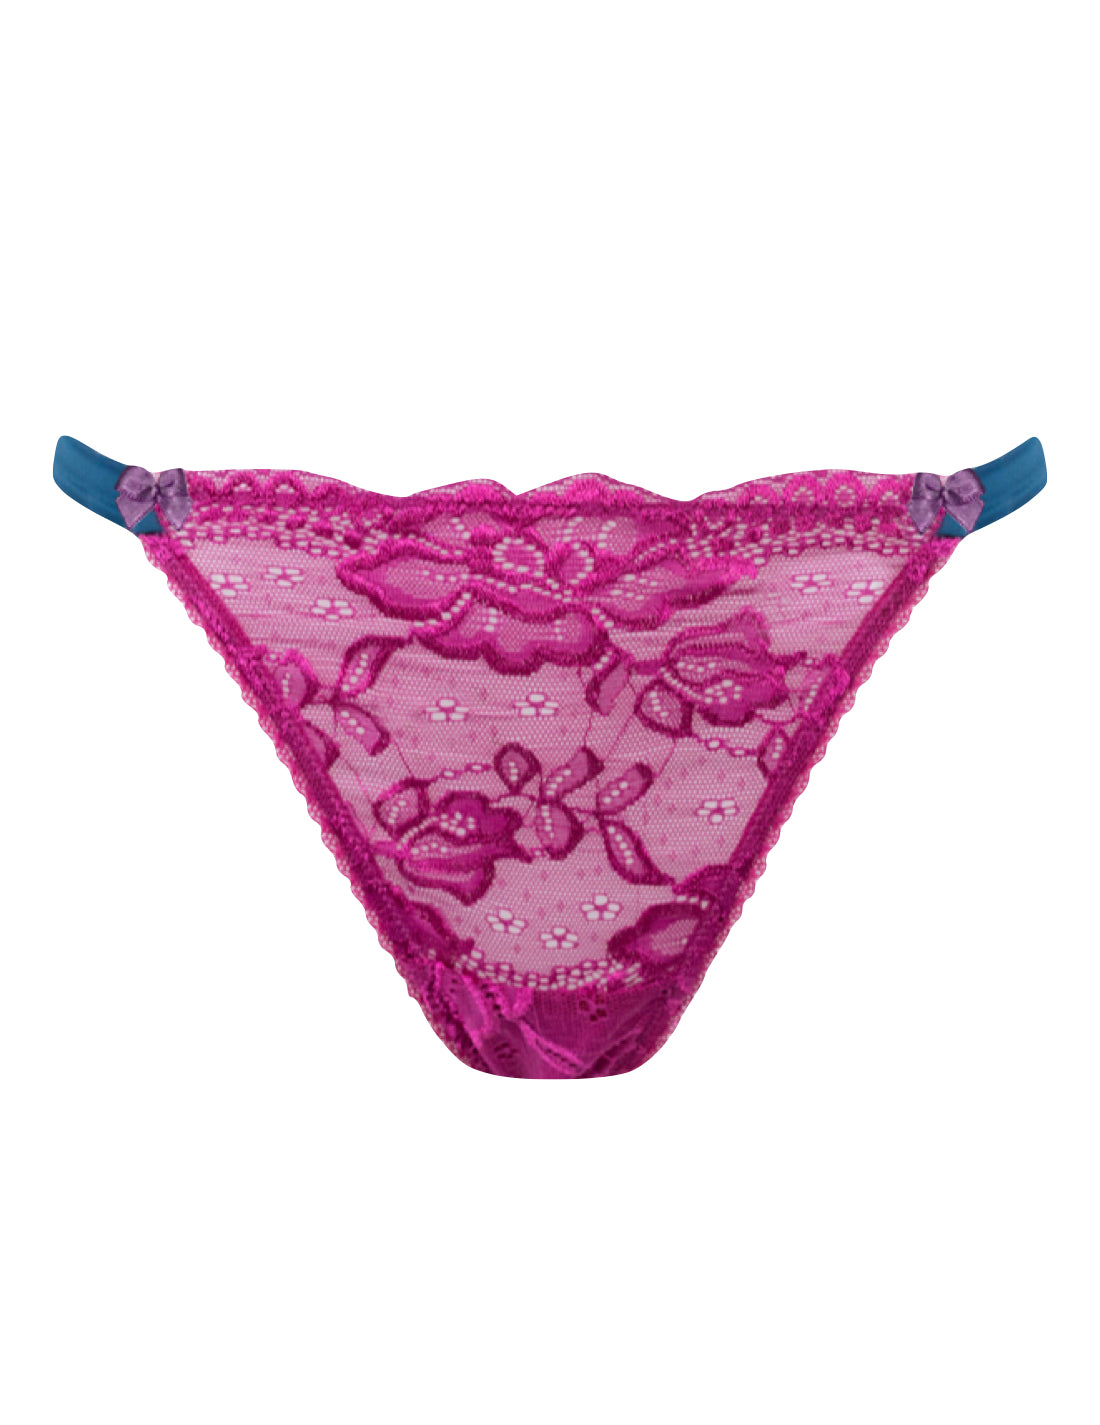 MIMI HOLLIDAY Fabulous Neon Pink Lace Padded Demi Bra Size UK 36B - EUR 80B  BNWT 5291211333611 on eBid Canada